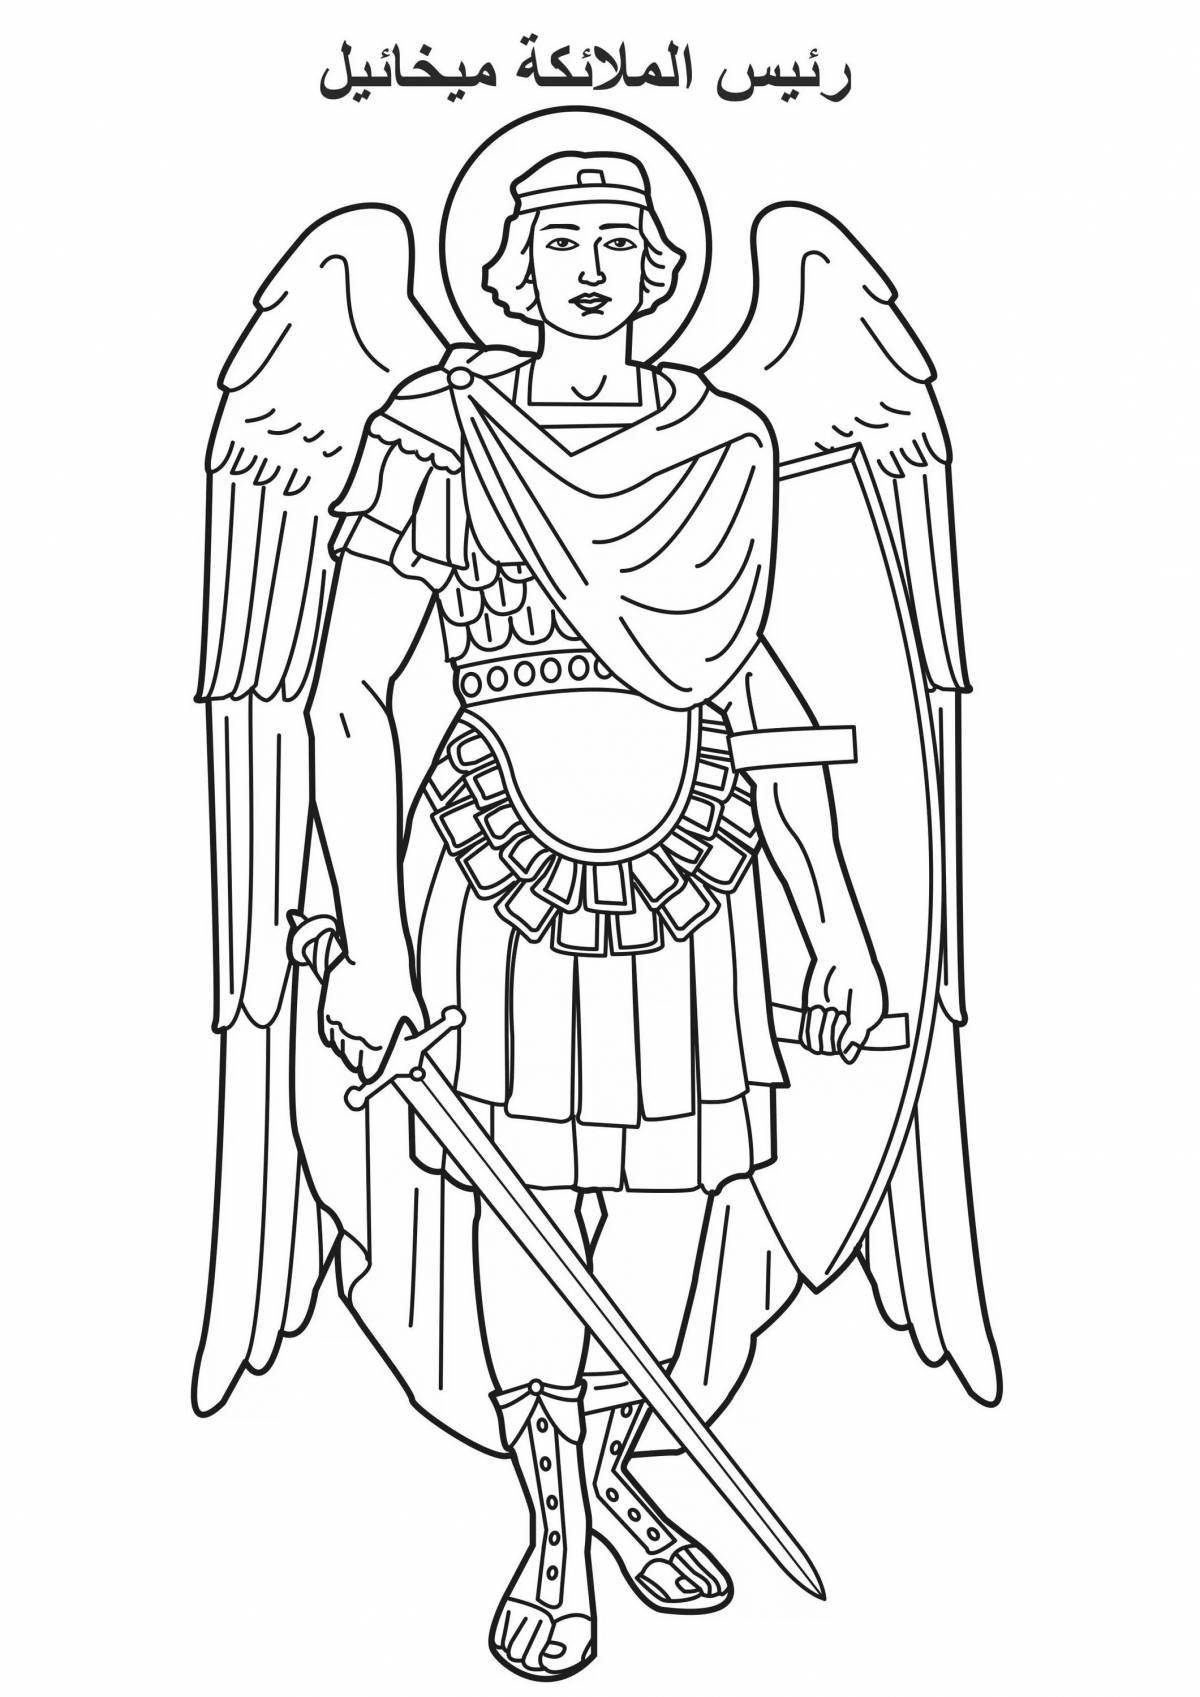 Coloring book exquisite archangel michael